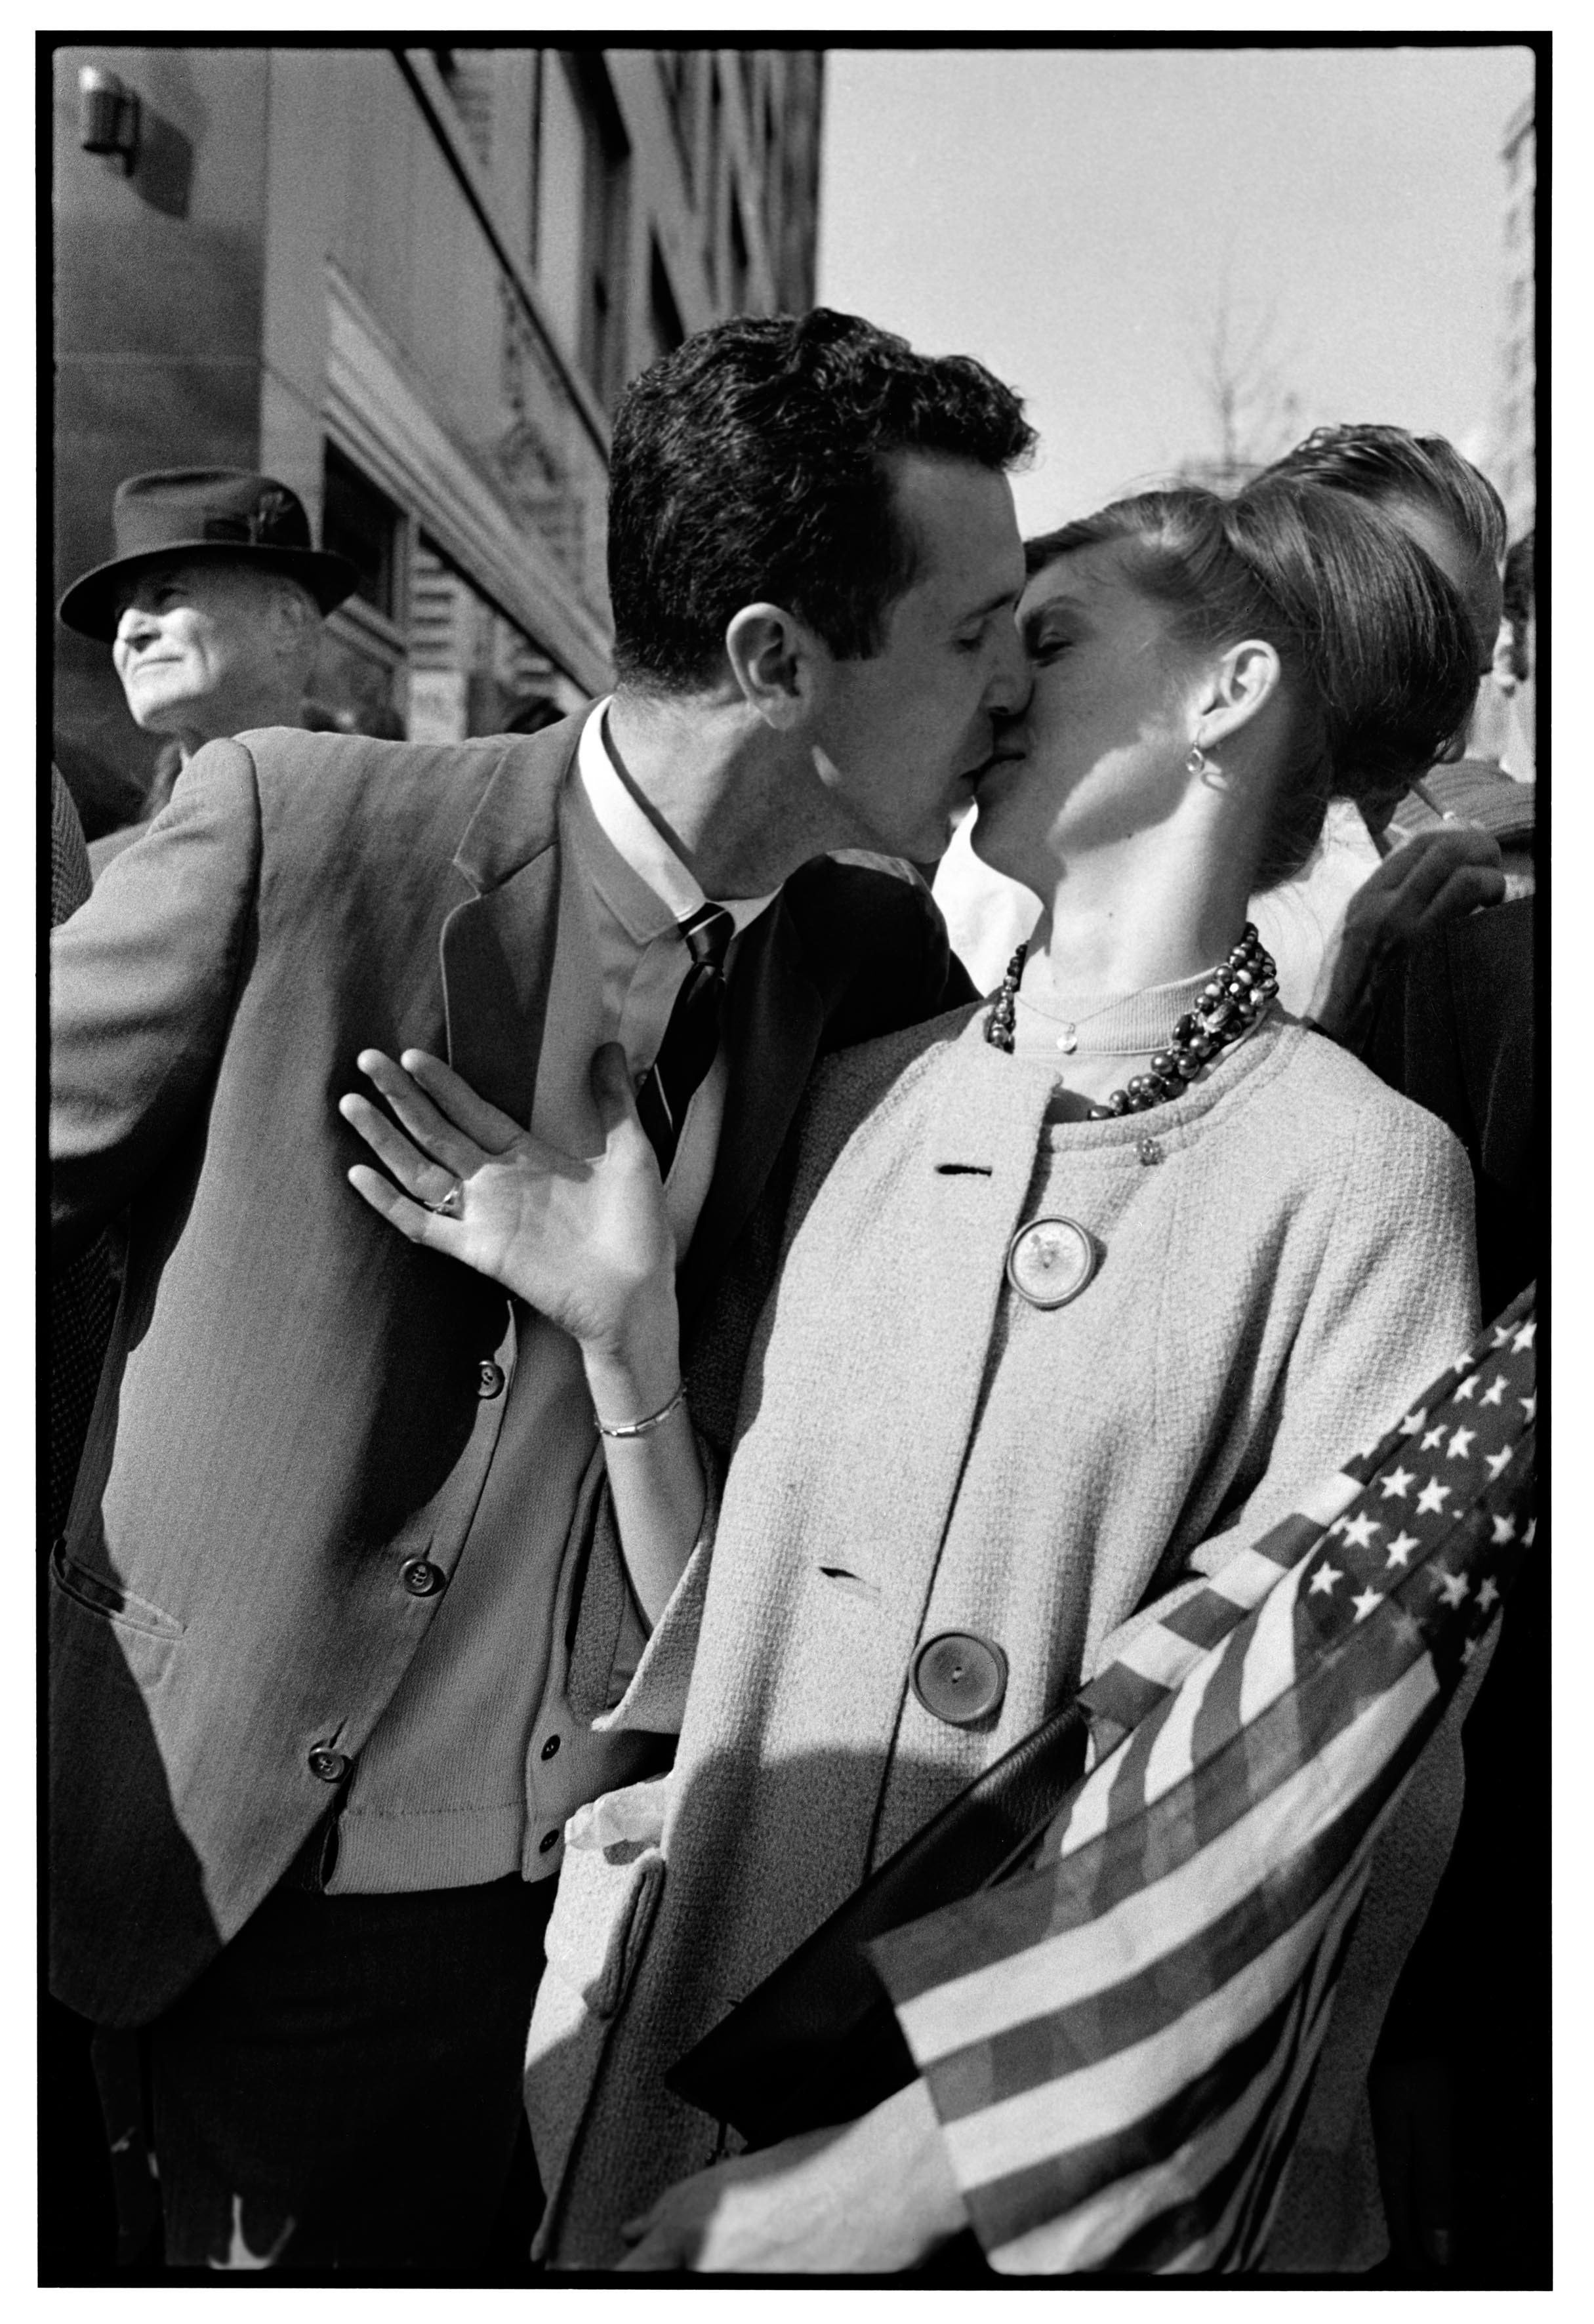 “Couple kissing at Pro–Vietnam War demonstration.” New York, 1968 © Mary Ellen Mark Foundation.